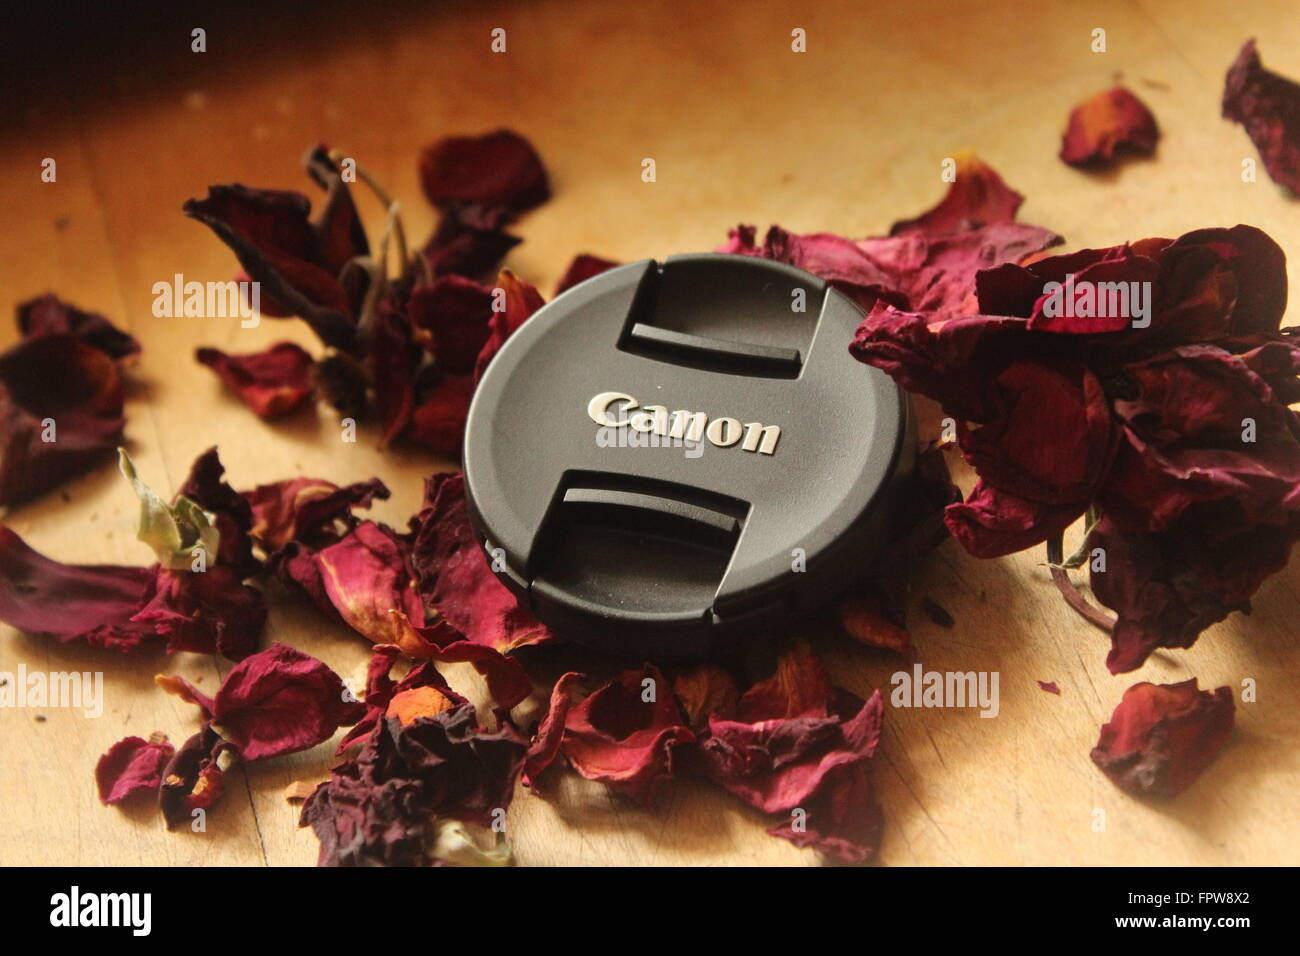 Canon Objektivdeckel auf zerdrückte rote Rosen Stockfoto